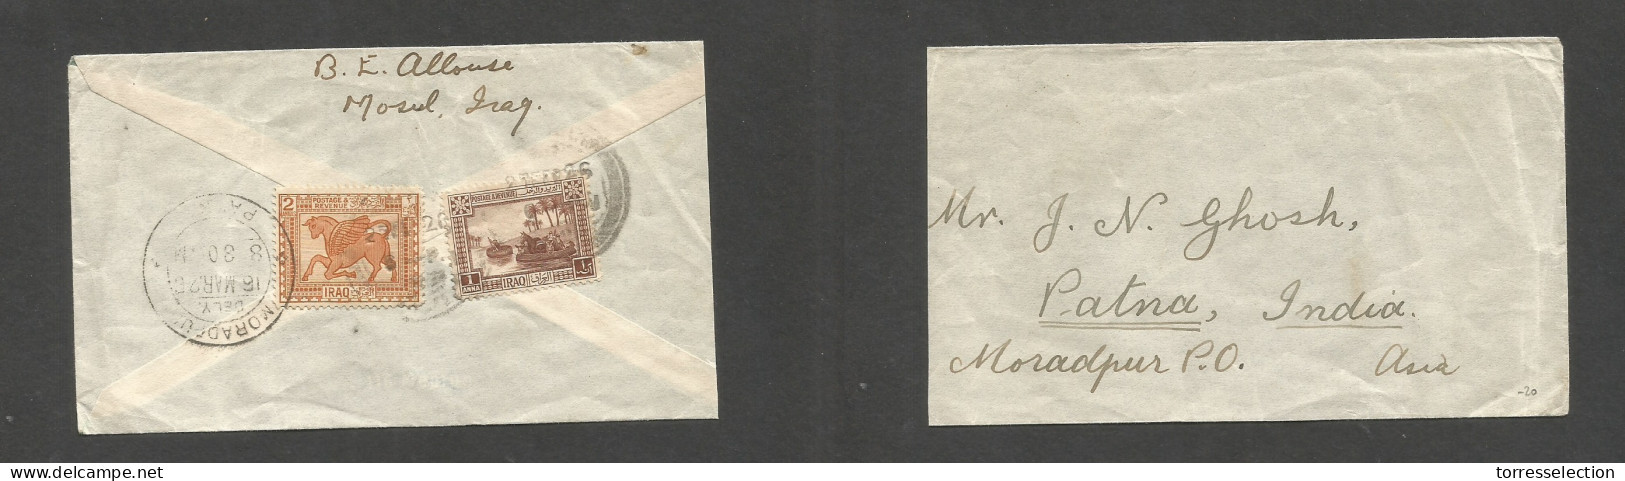 IRAQ. 1926 (16 March) Moradeul, Mosul - India, Patna. Reverse Multifkd Envelope At 3a Rate. SALE. - Iraq